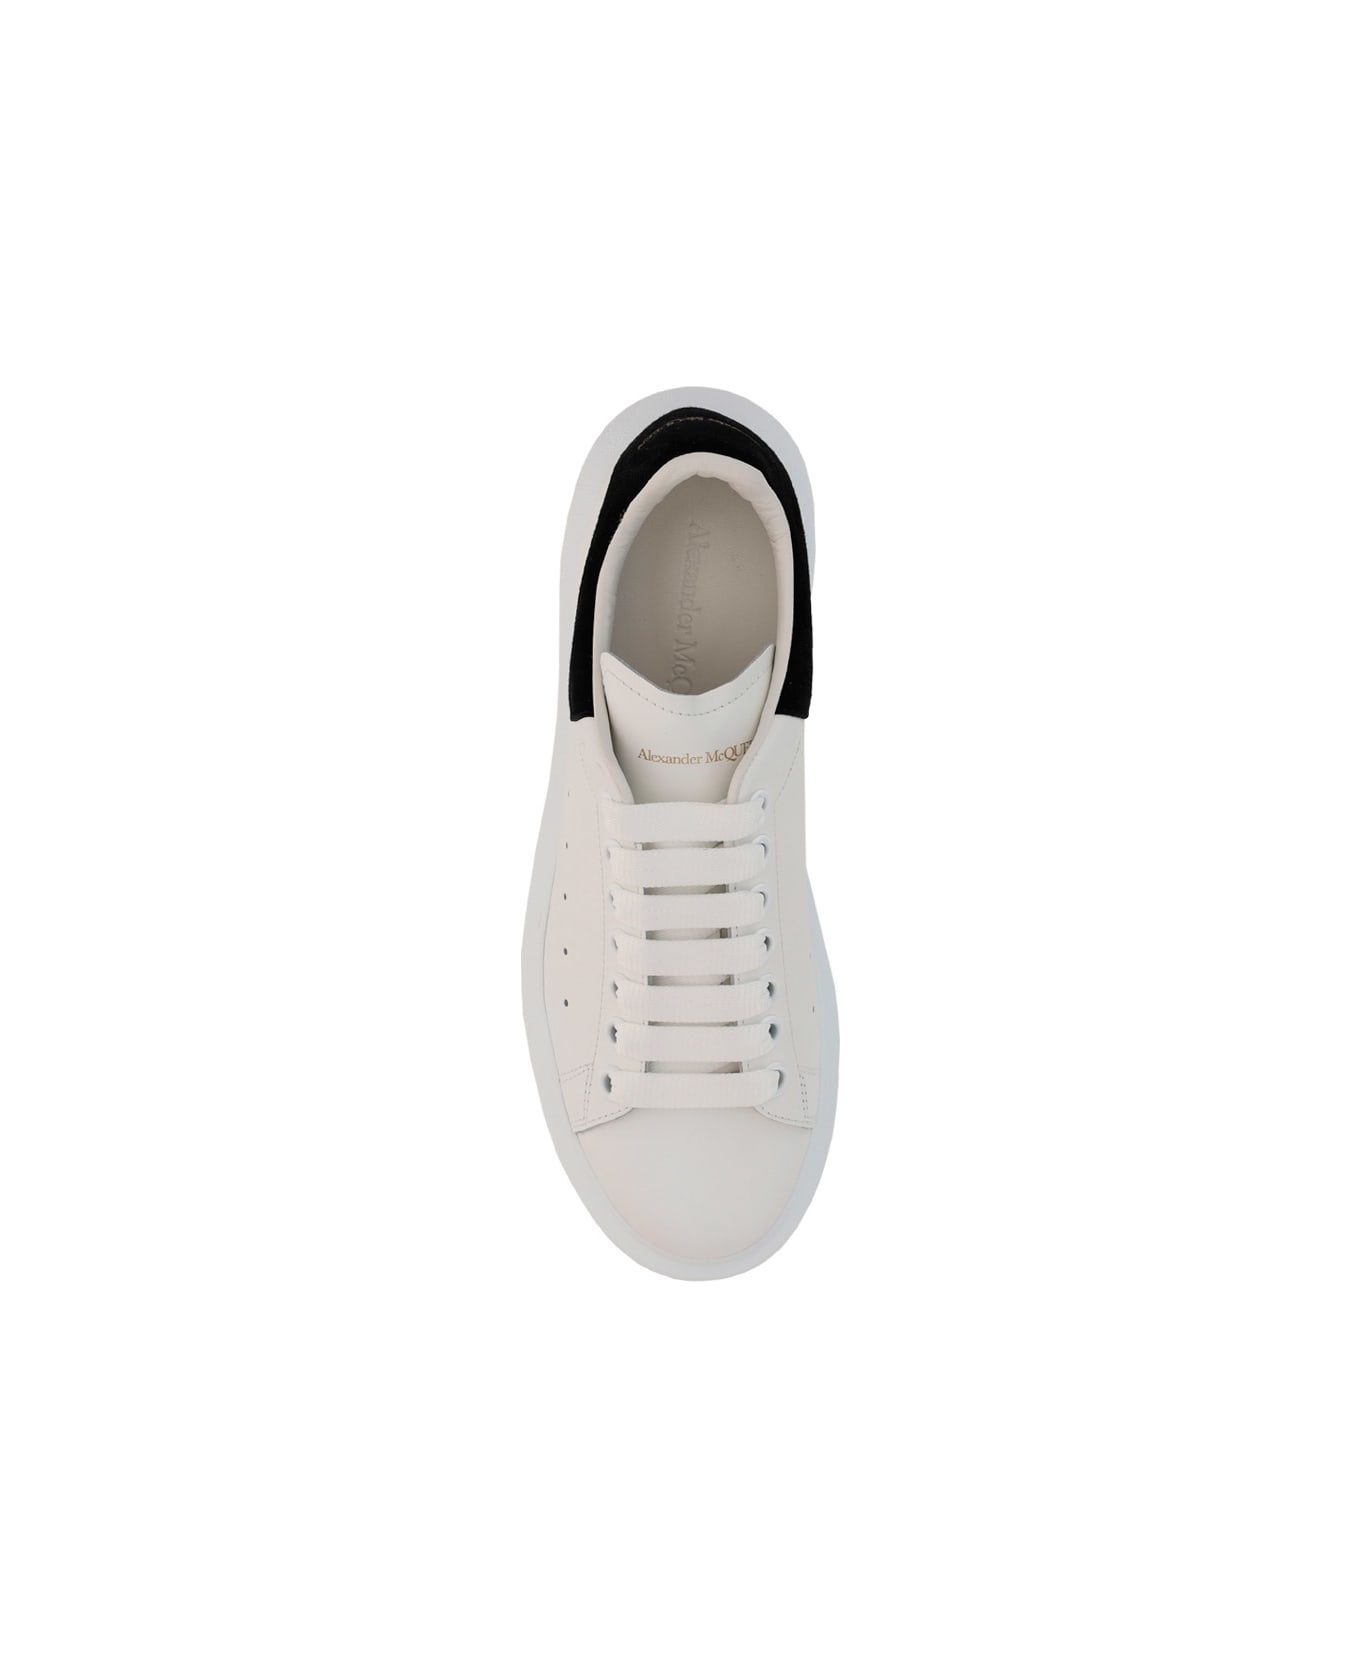 Alexander McQueen Sneakers - White/black